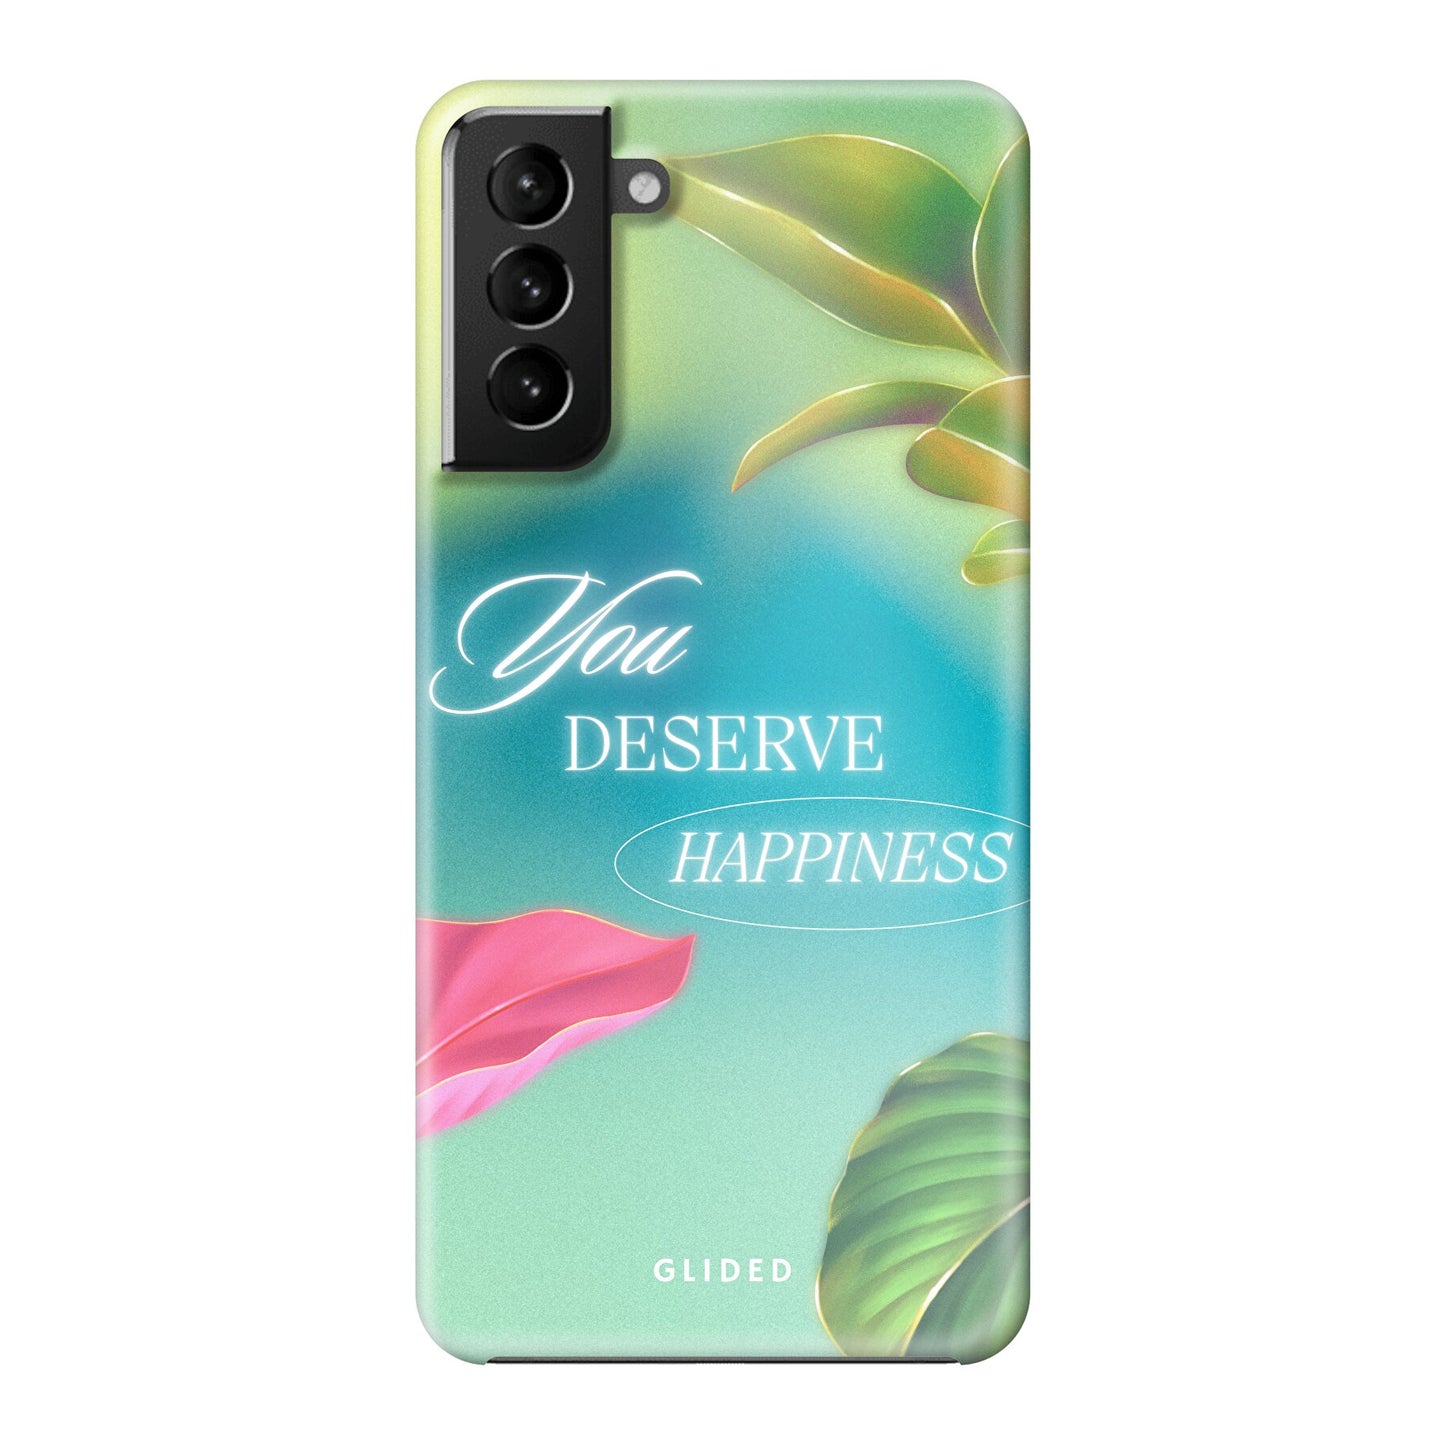 Happiness - Samsung Galaxy S21 Plus 5G - Hard Case